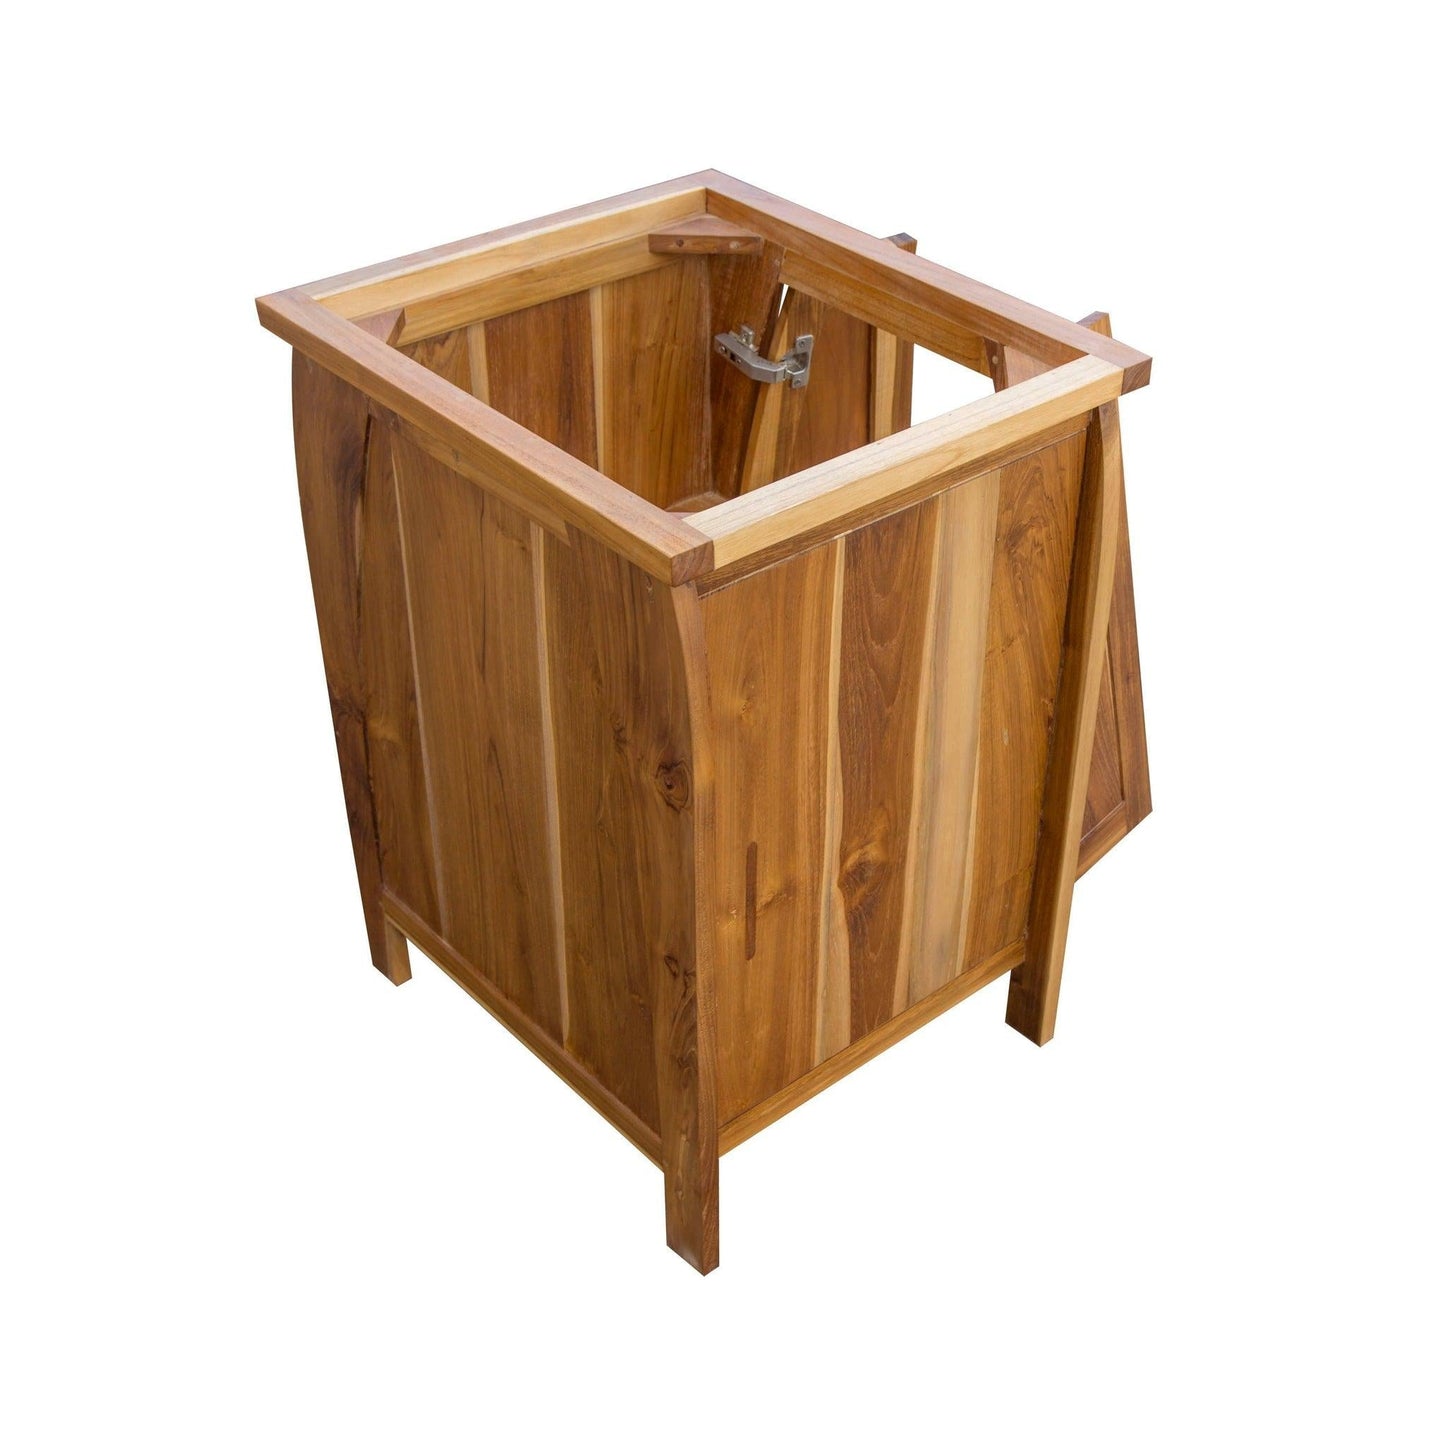 EcoDecors Tranquility 24" EarthyTeak Solid Teak Wood Fully Assembled Freestanding Vanity Base